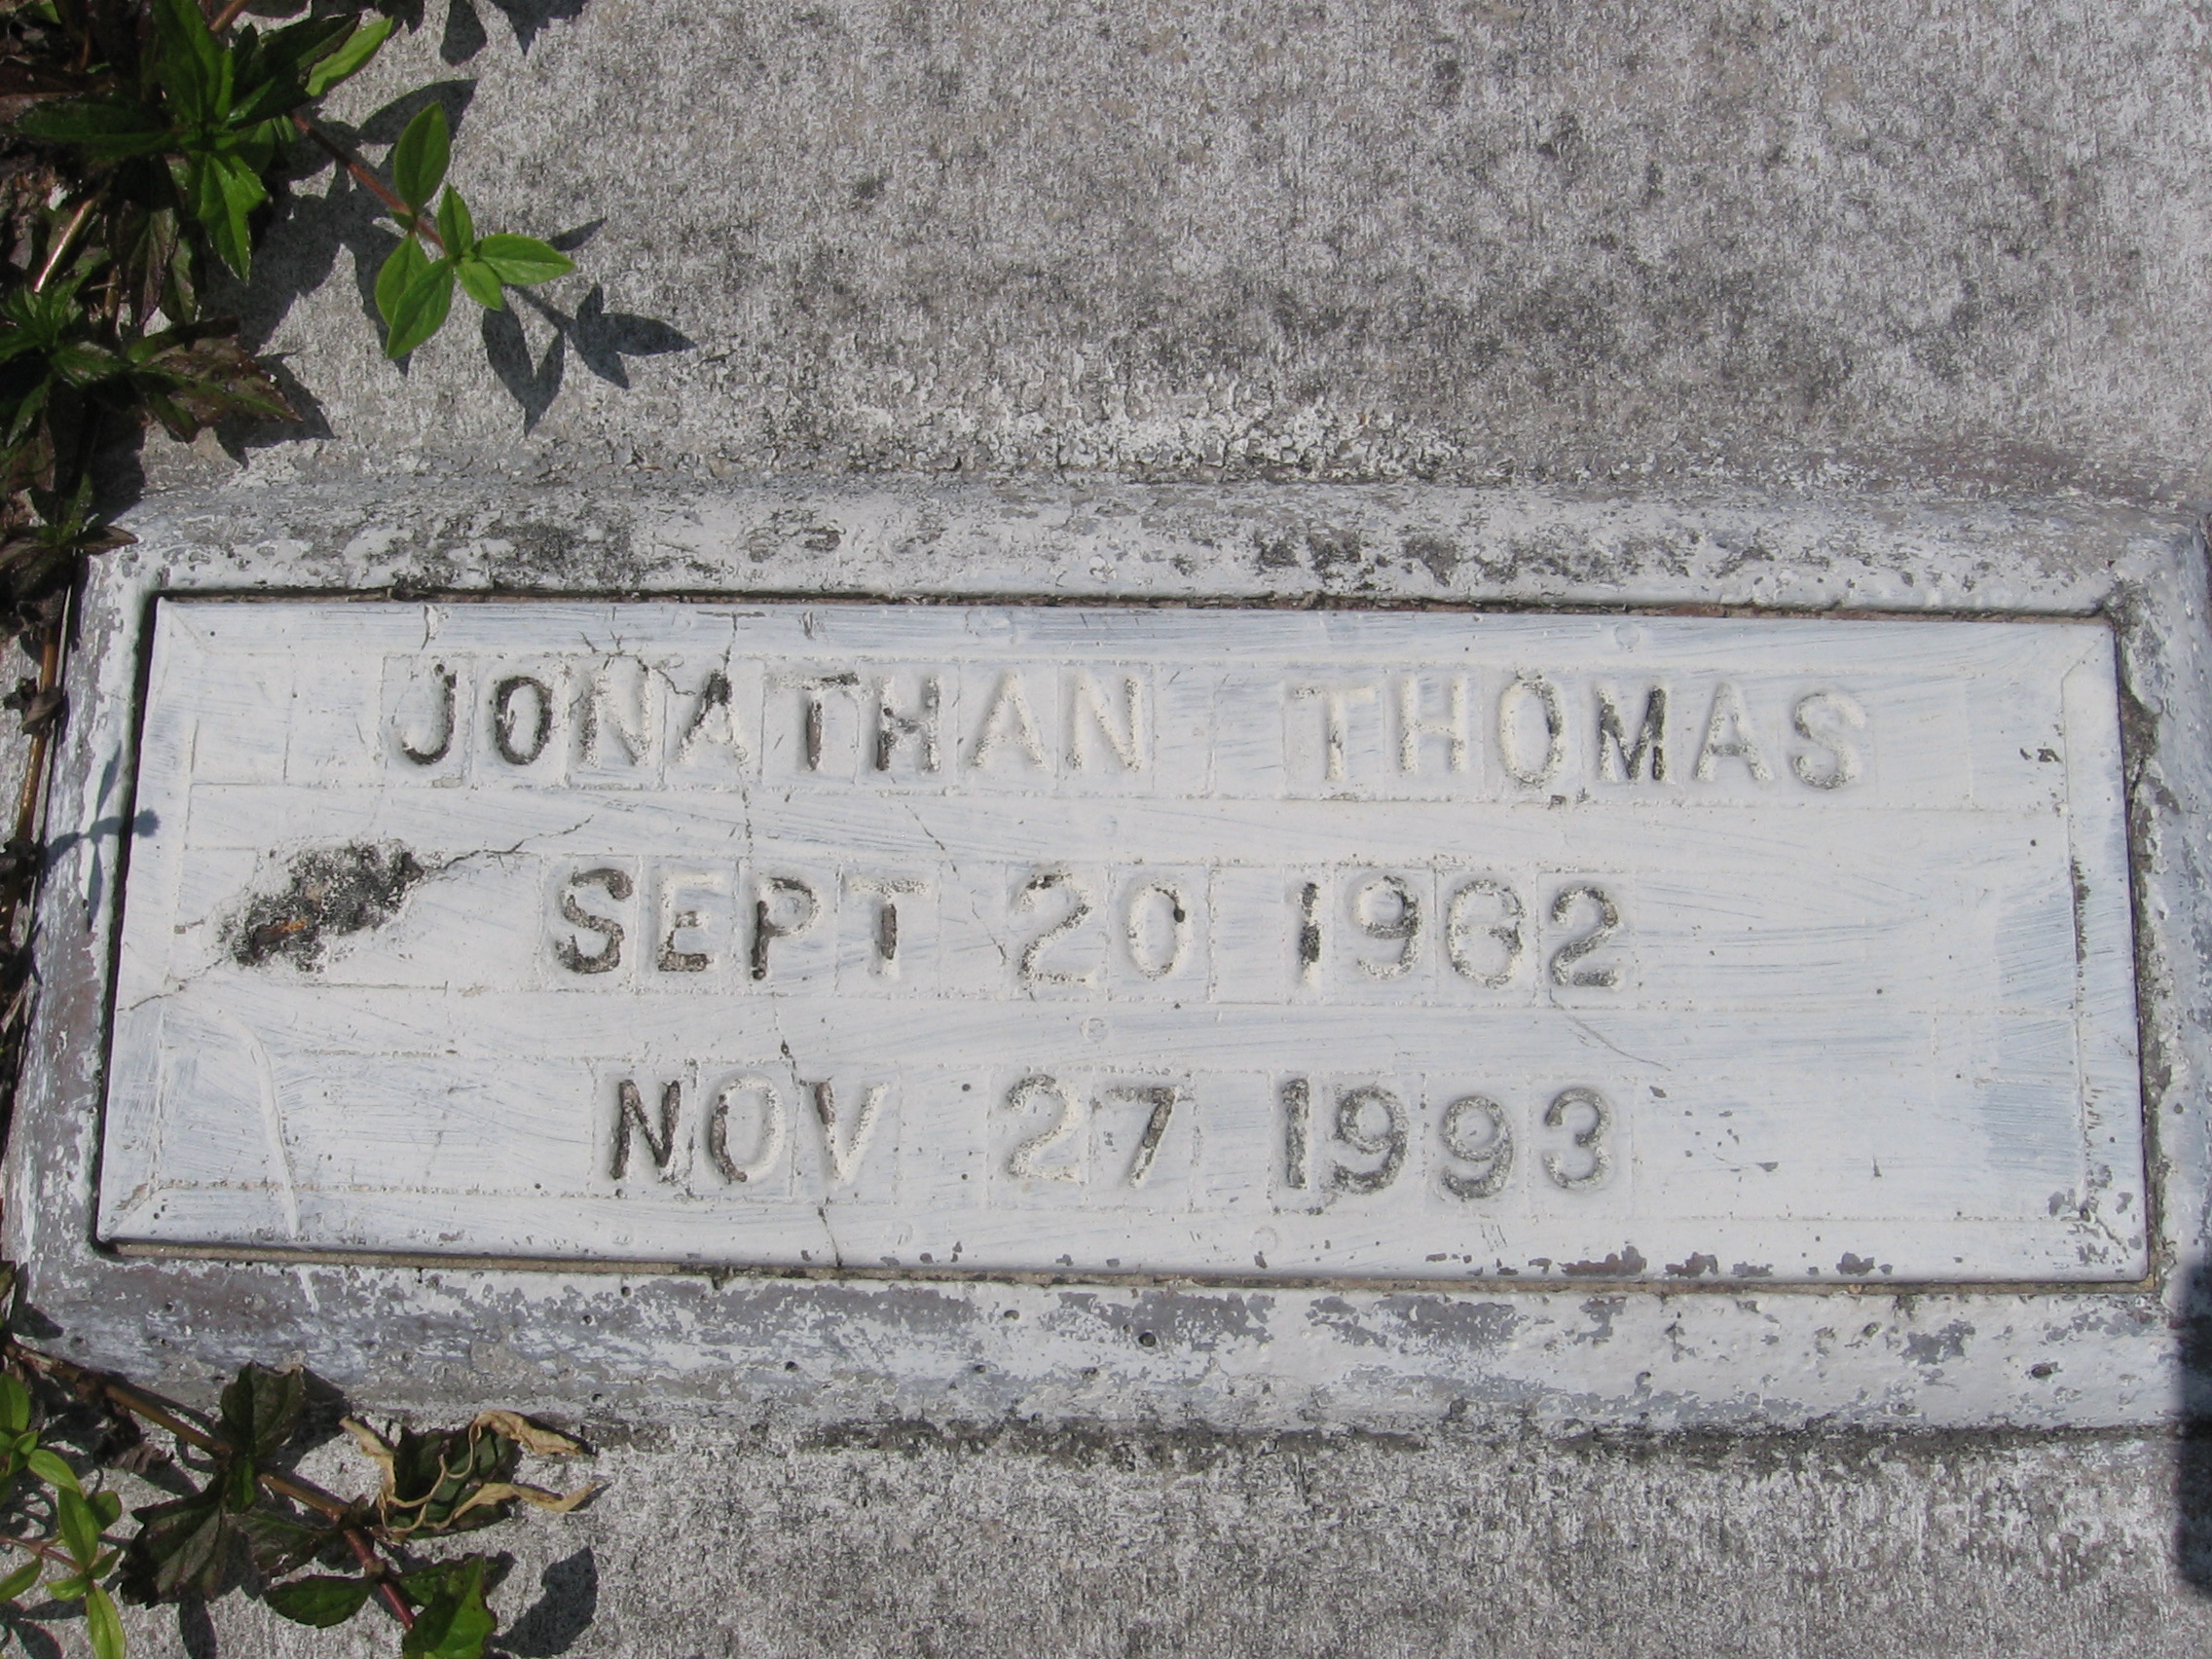 Jonathan David Thomas